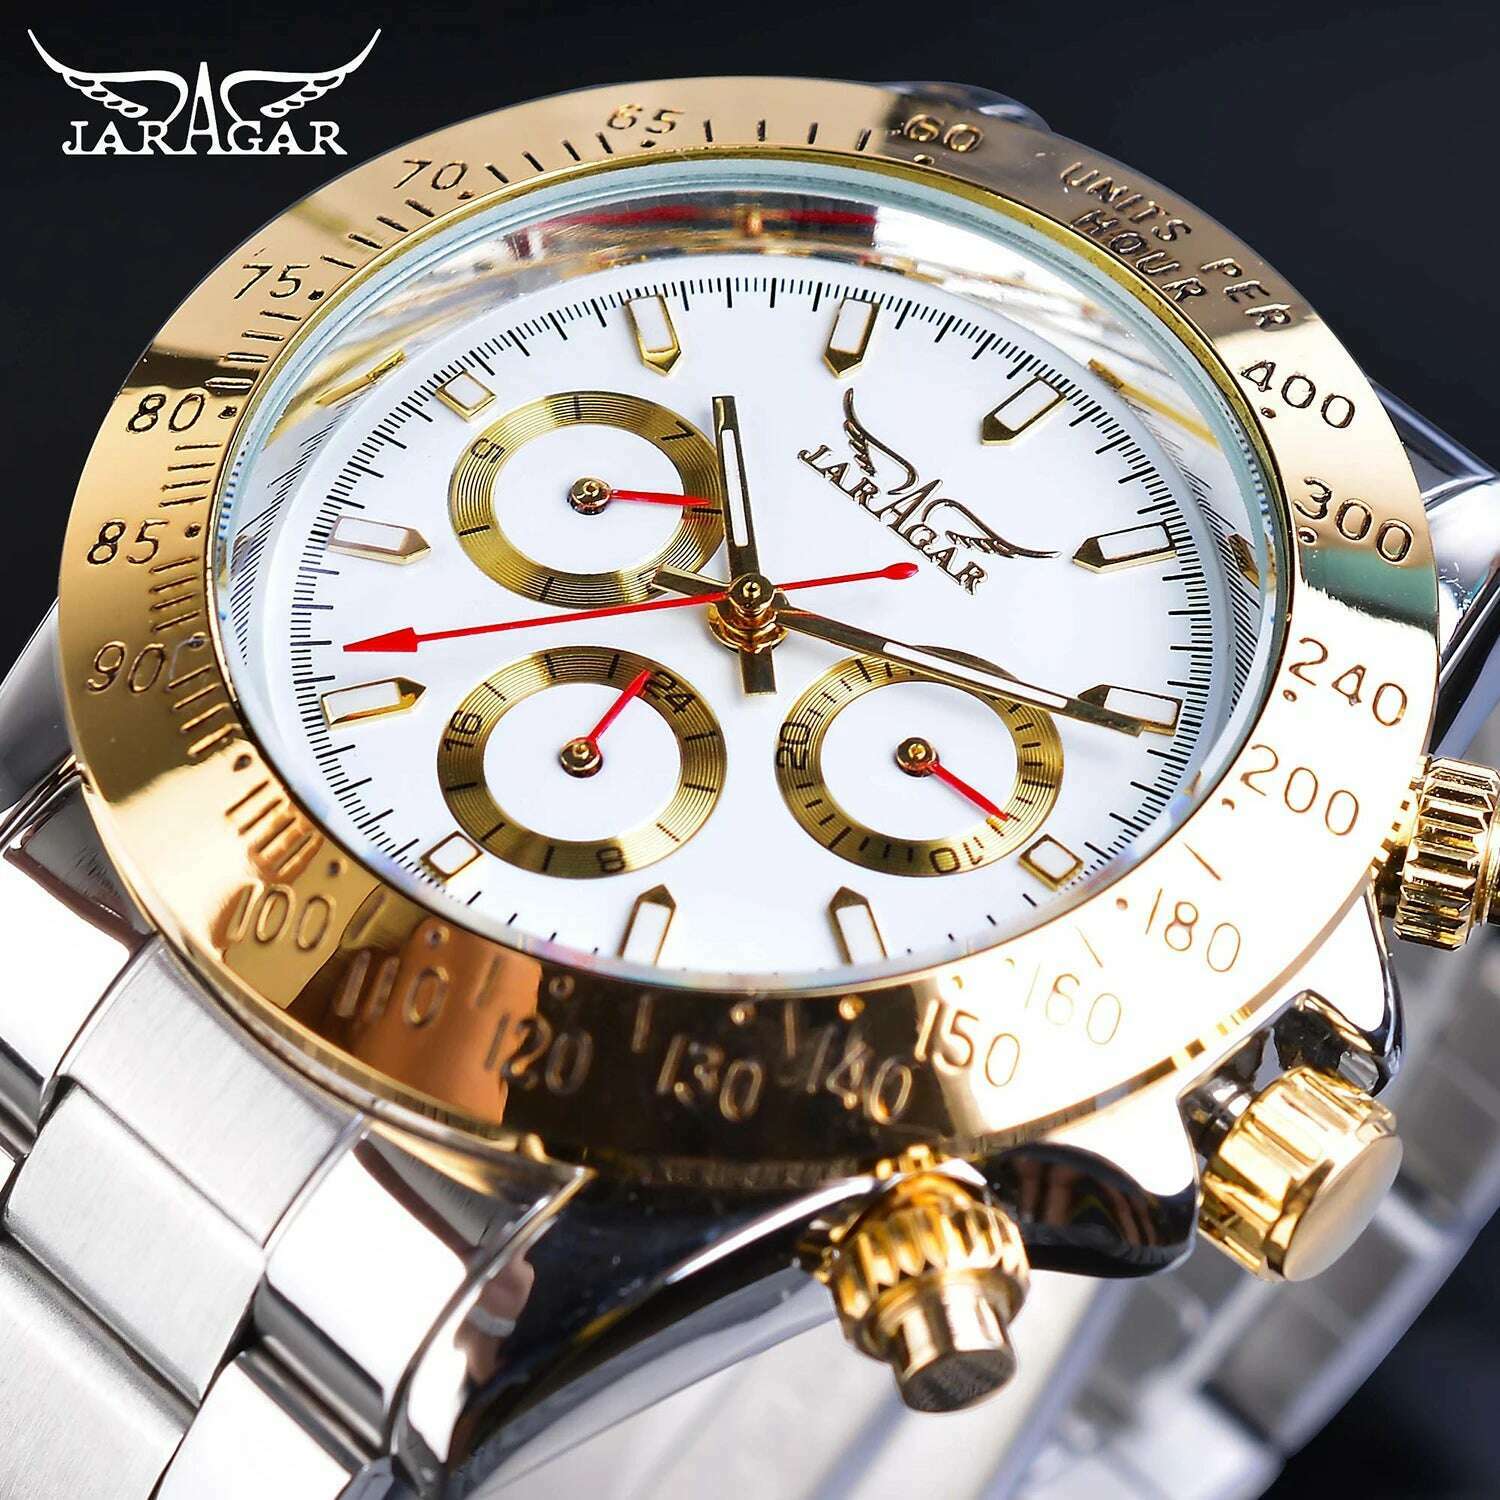 KIMLUD, Jaragar Relogio Masculino Watch Men 2019 Golden Big Dial Calendar Display Automatic Steel Wrist Watches Mechanical Clock For Men, KIMLUD Womens Clothes